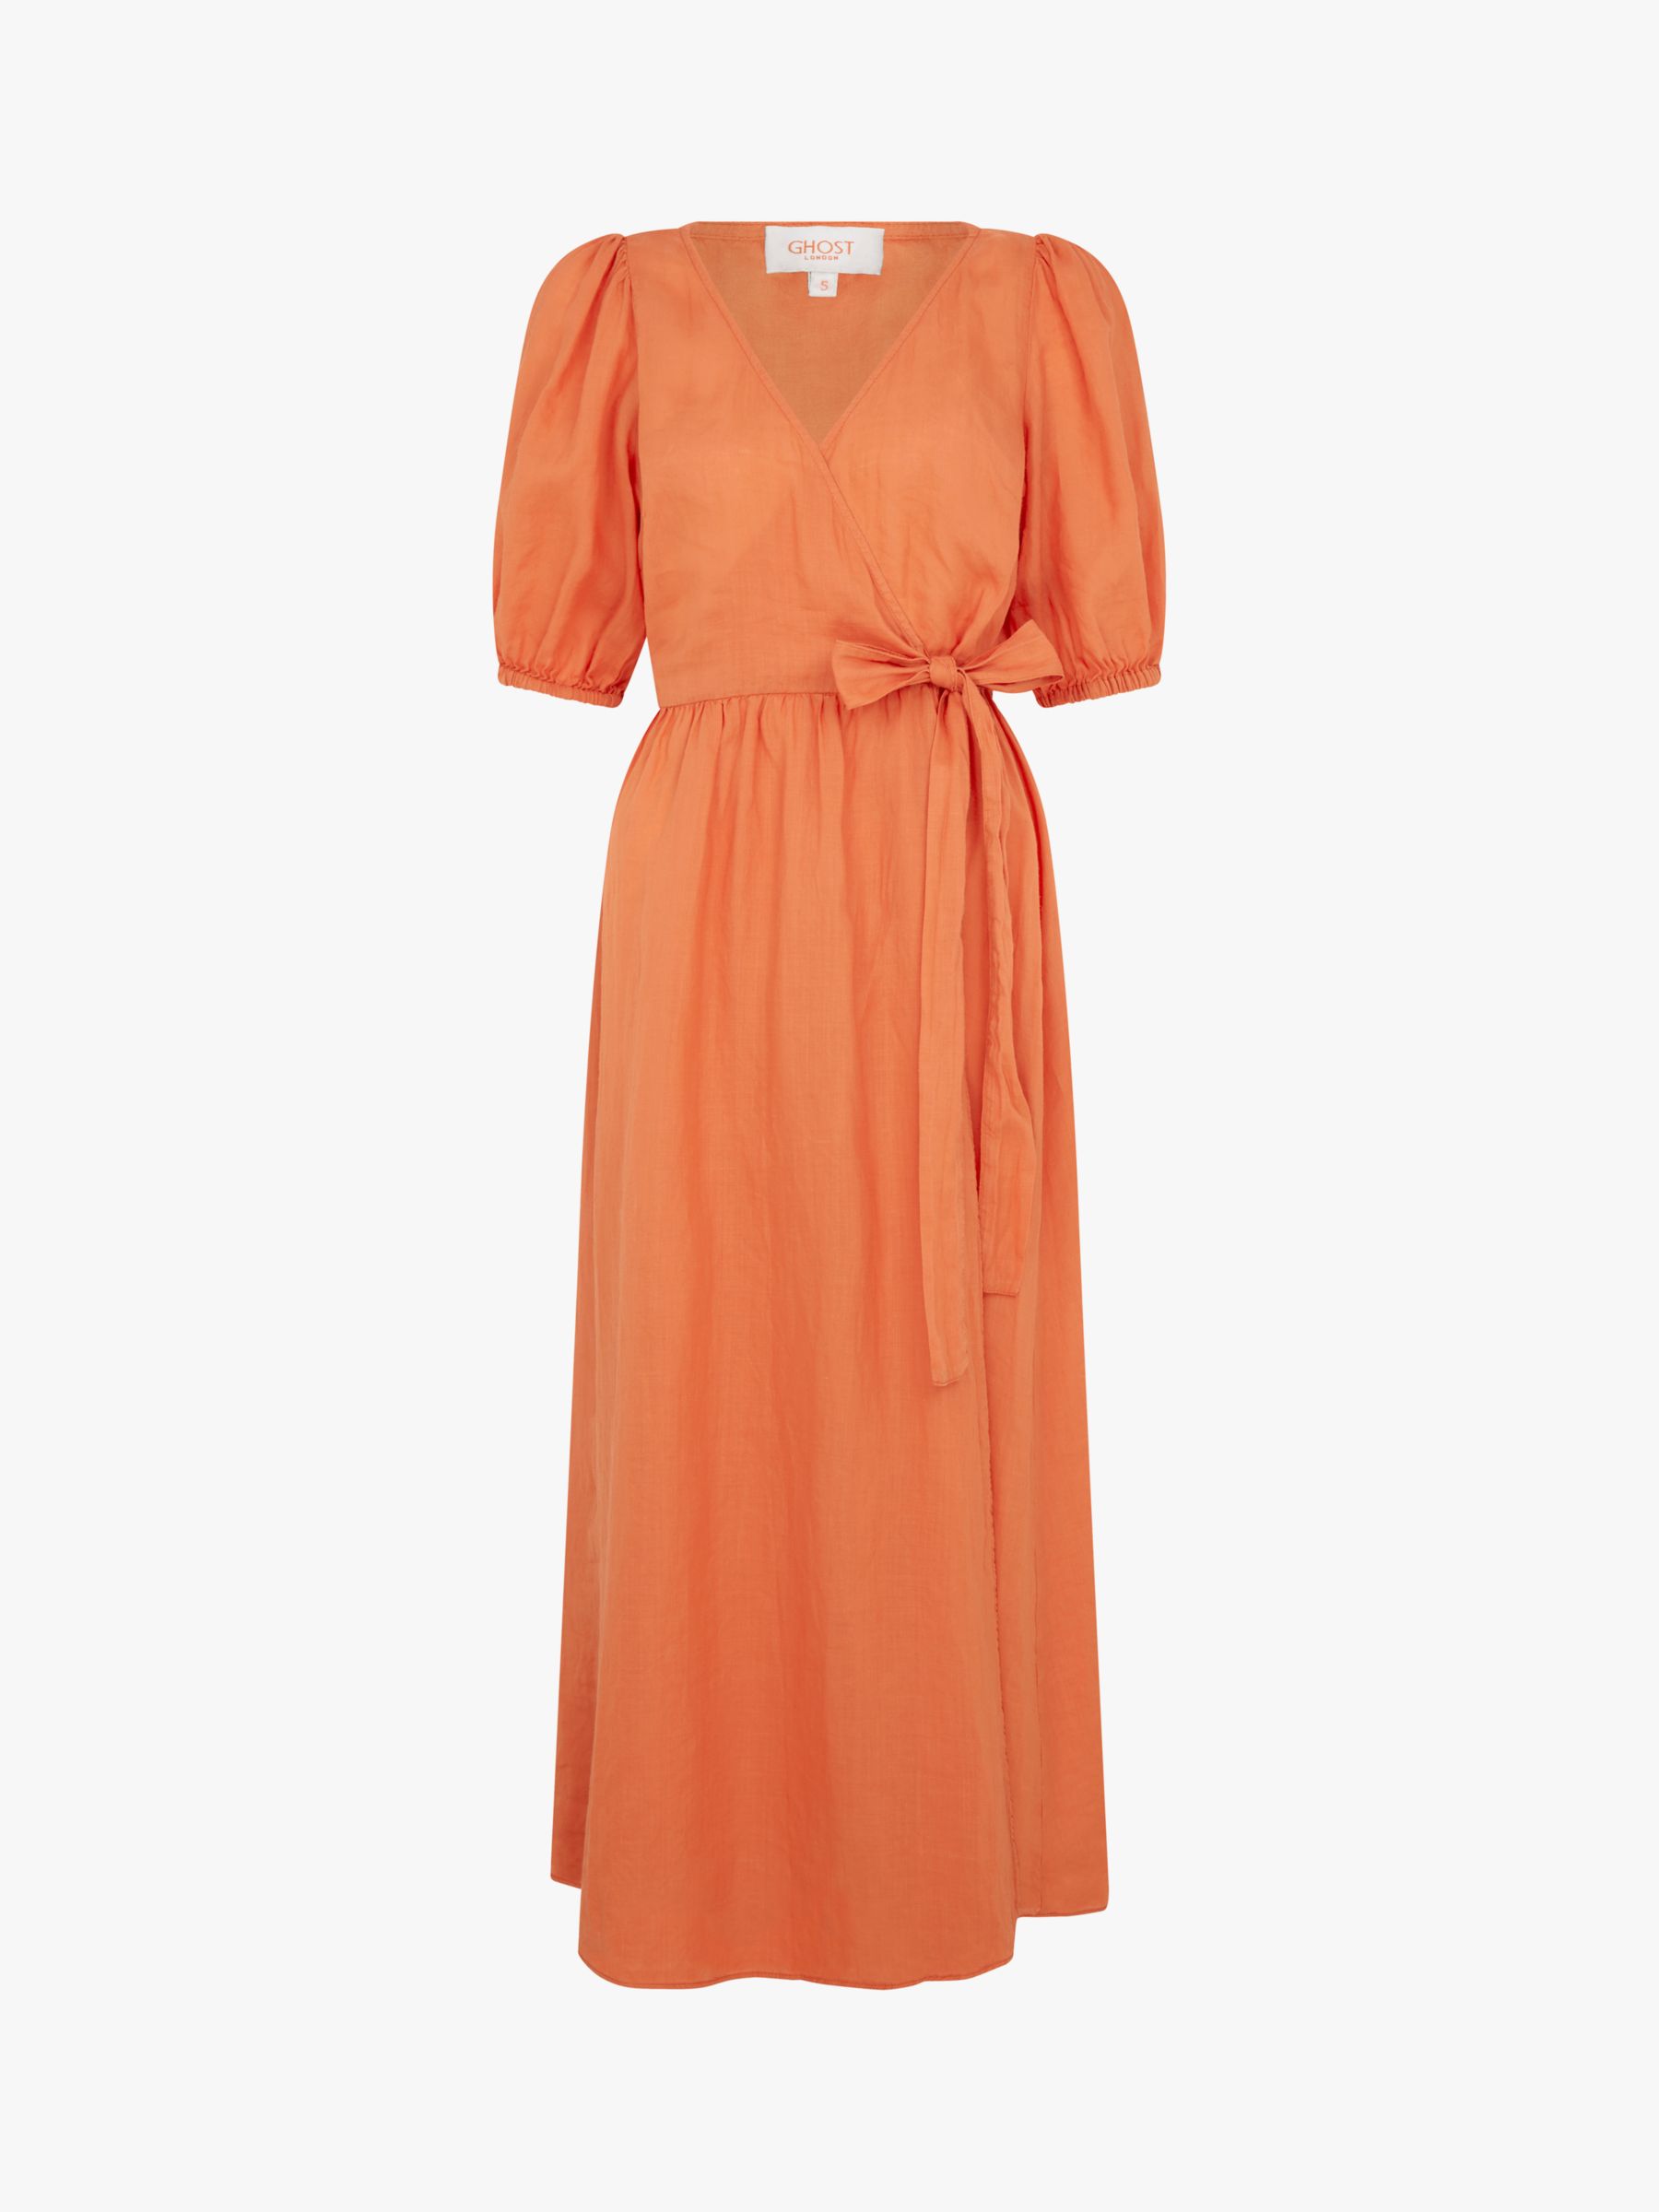 Ghost Greta Ramie Linen Wrap Dress, Tan at John Lewis & Partners